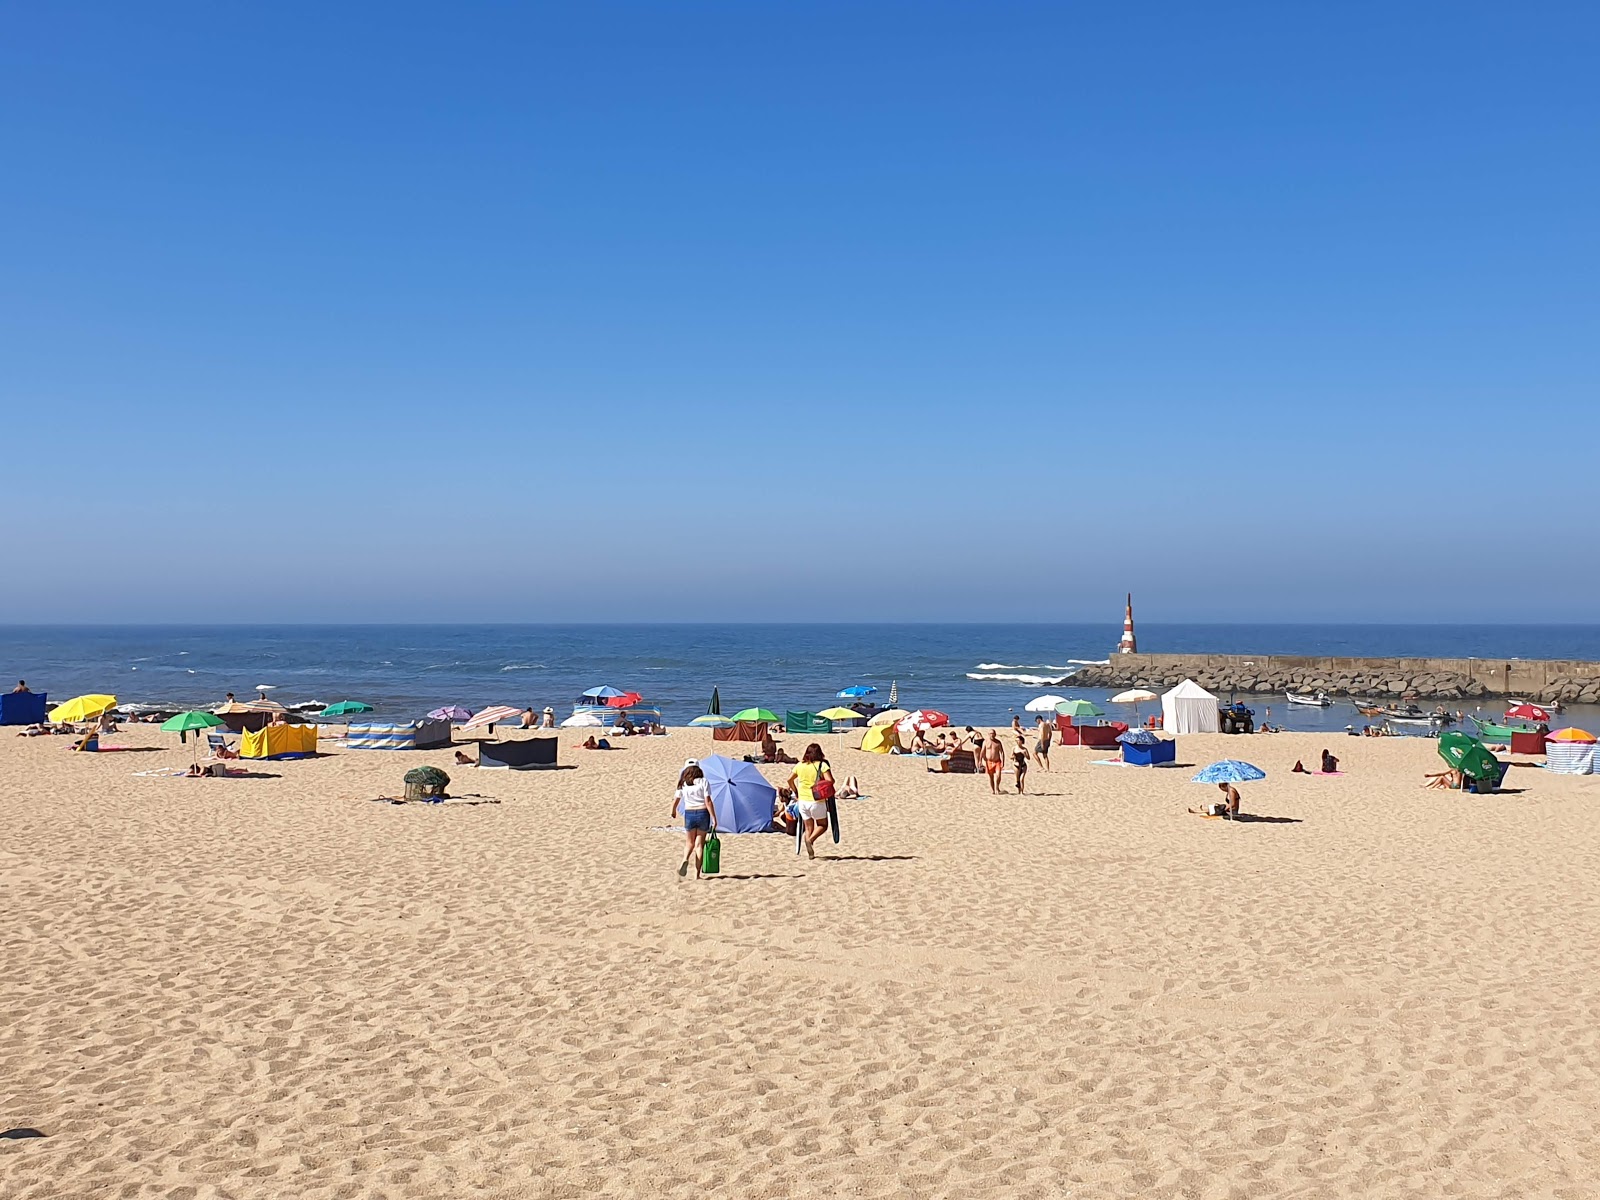 Fotografie cu Praia da Aguda - locul popular printre cunoscătorii de relaxare